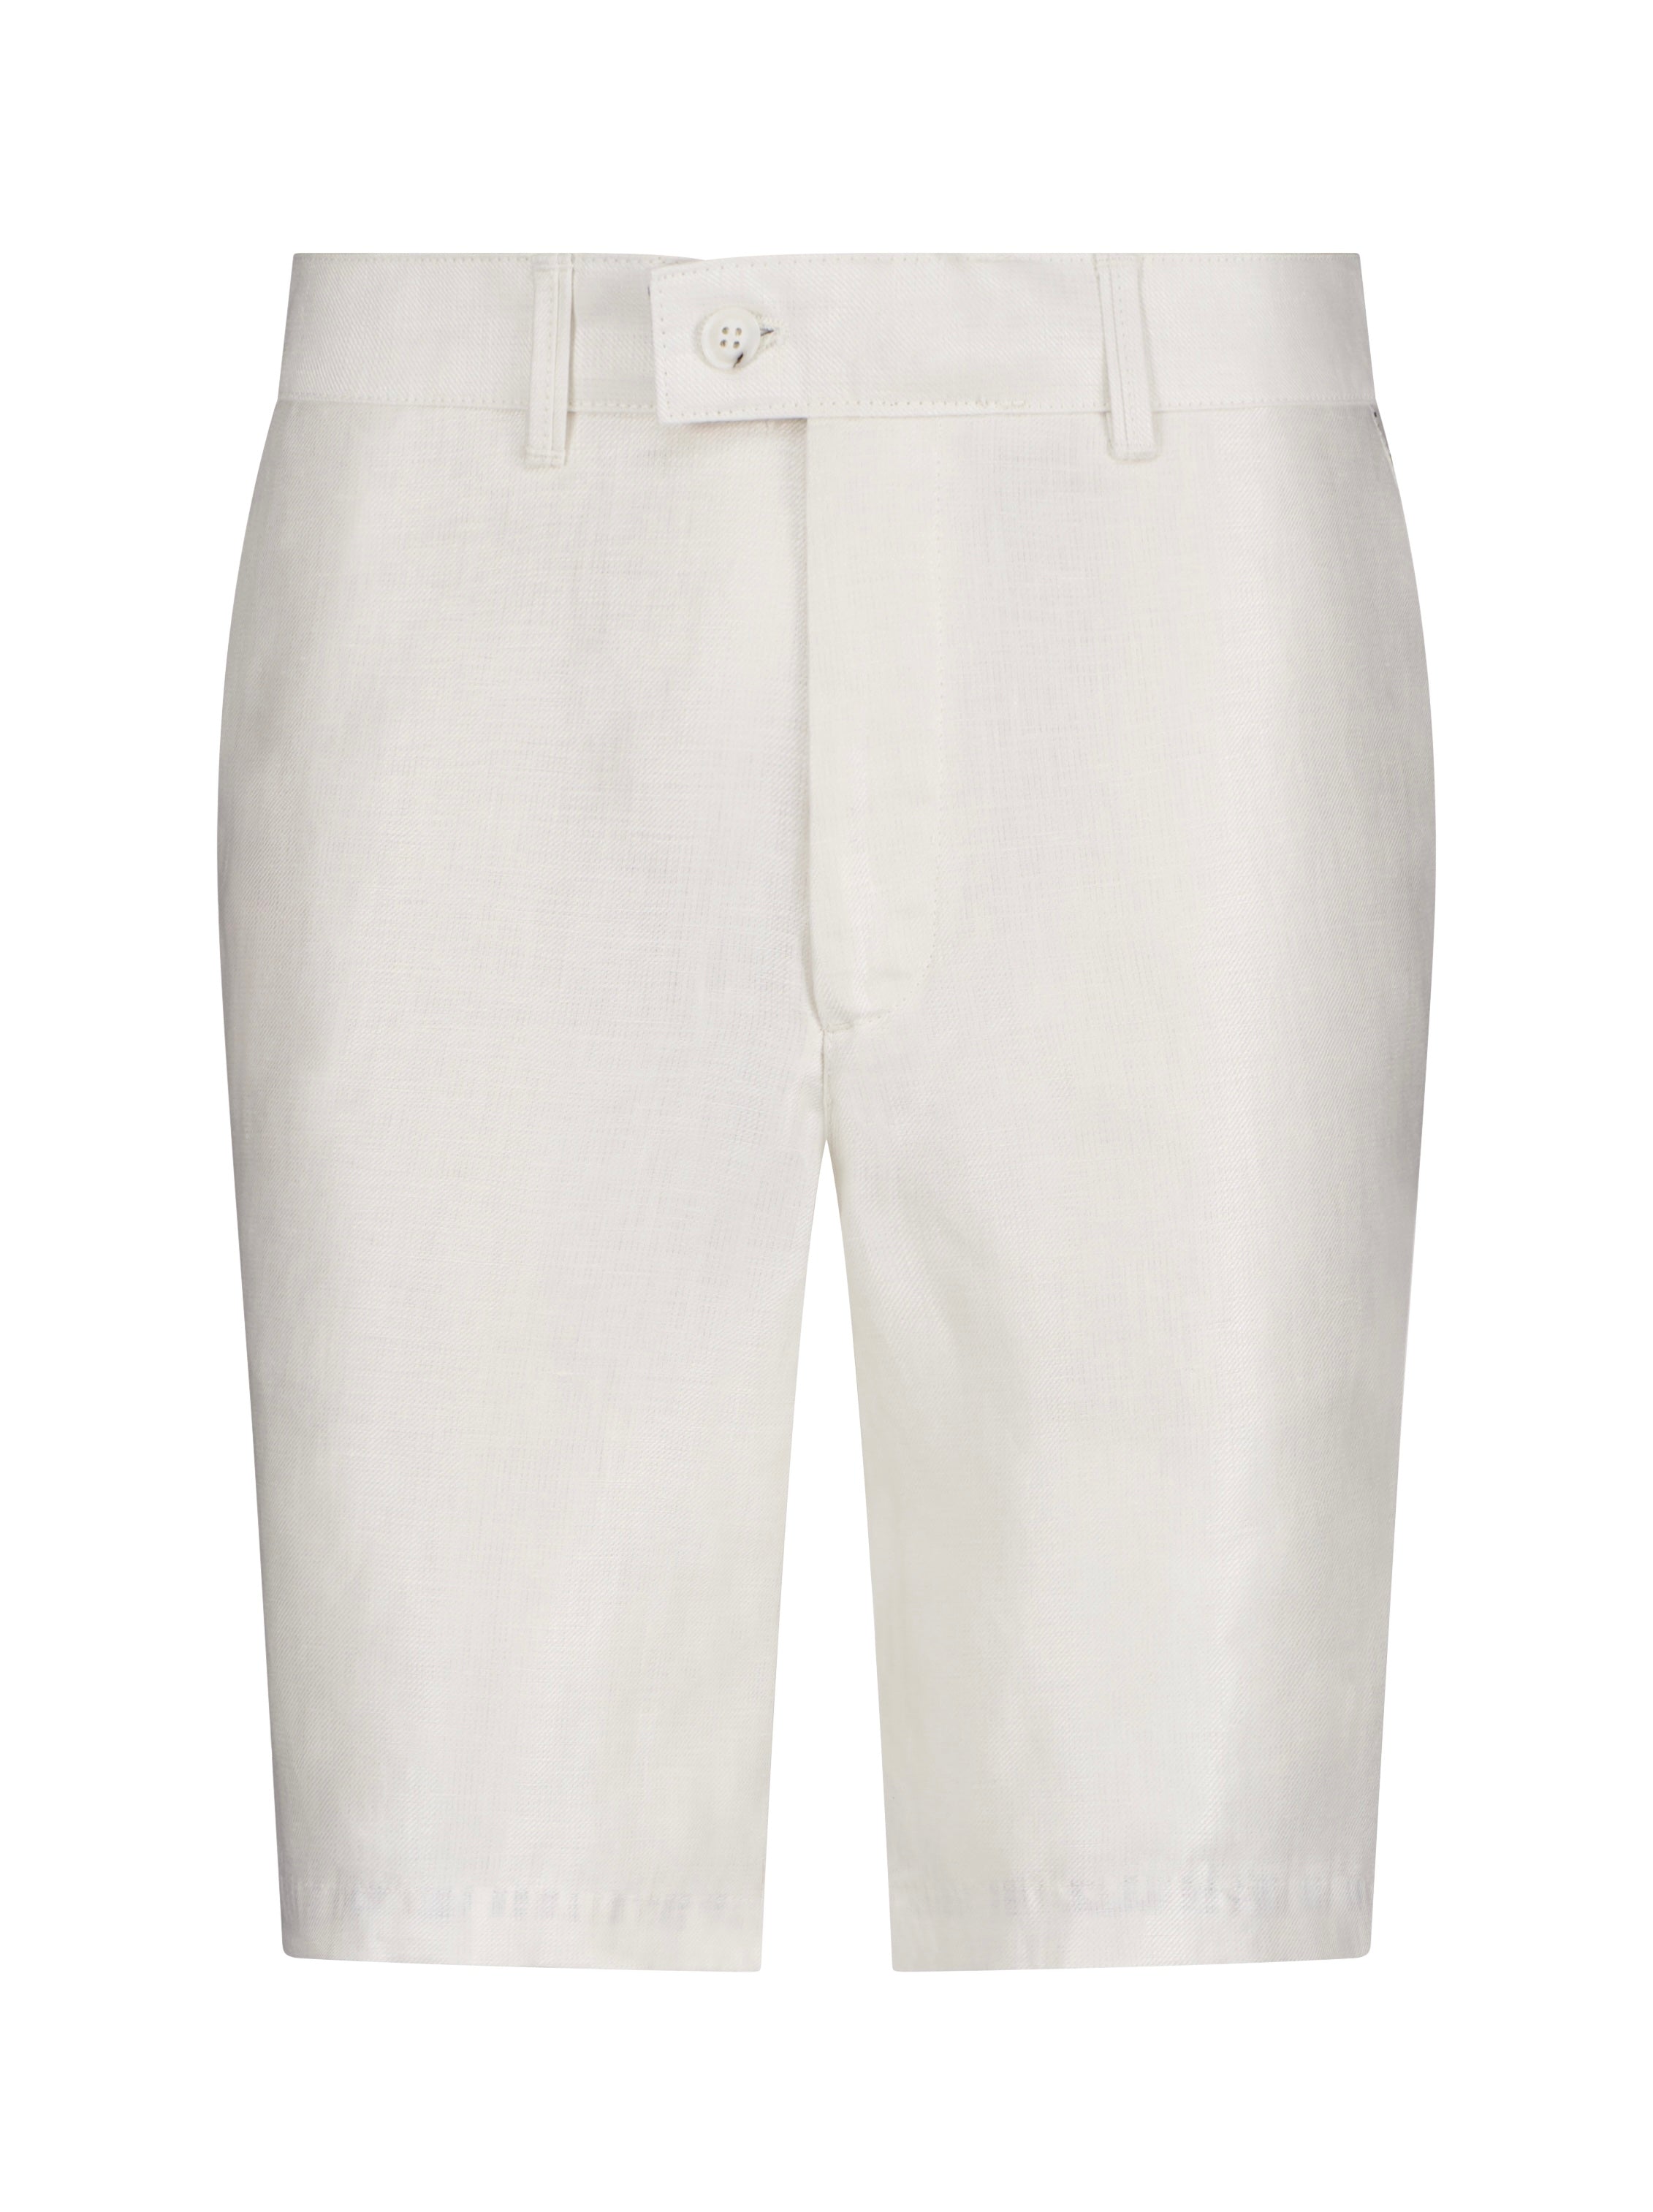 The Nuno Linen Shorts - White -  by Urbbana